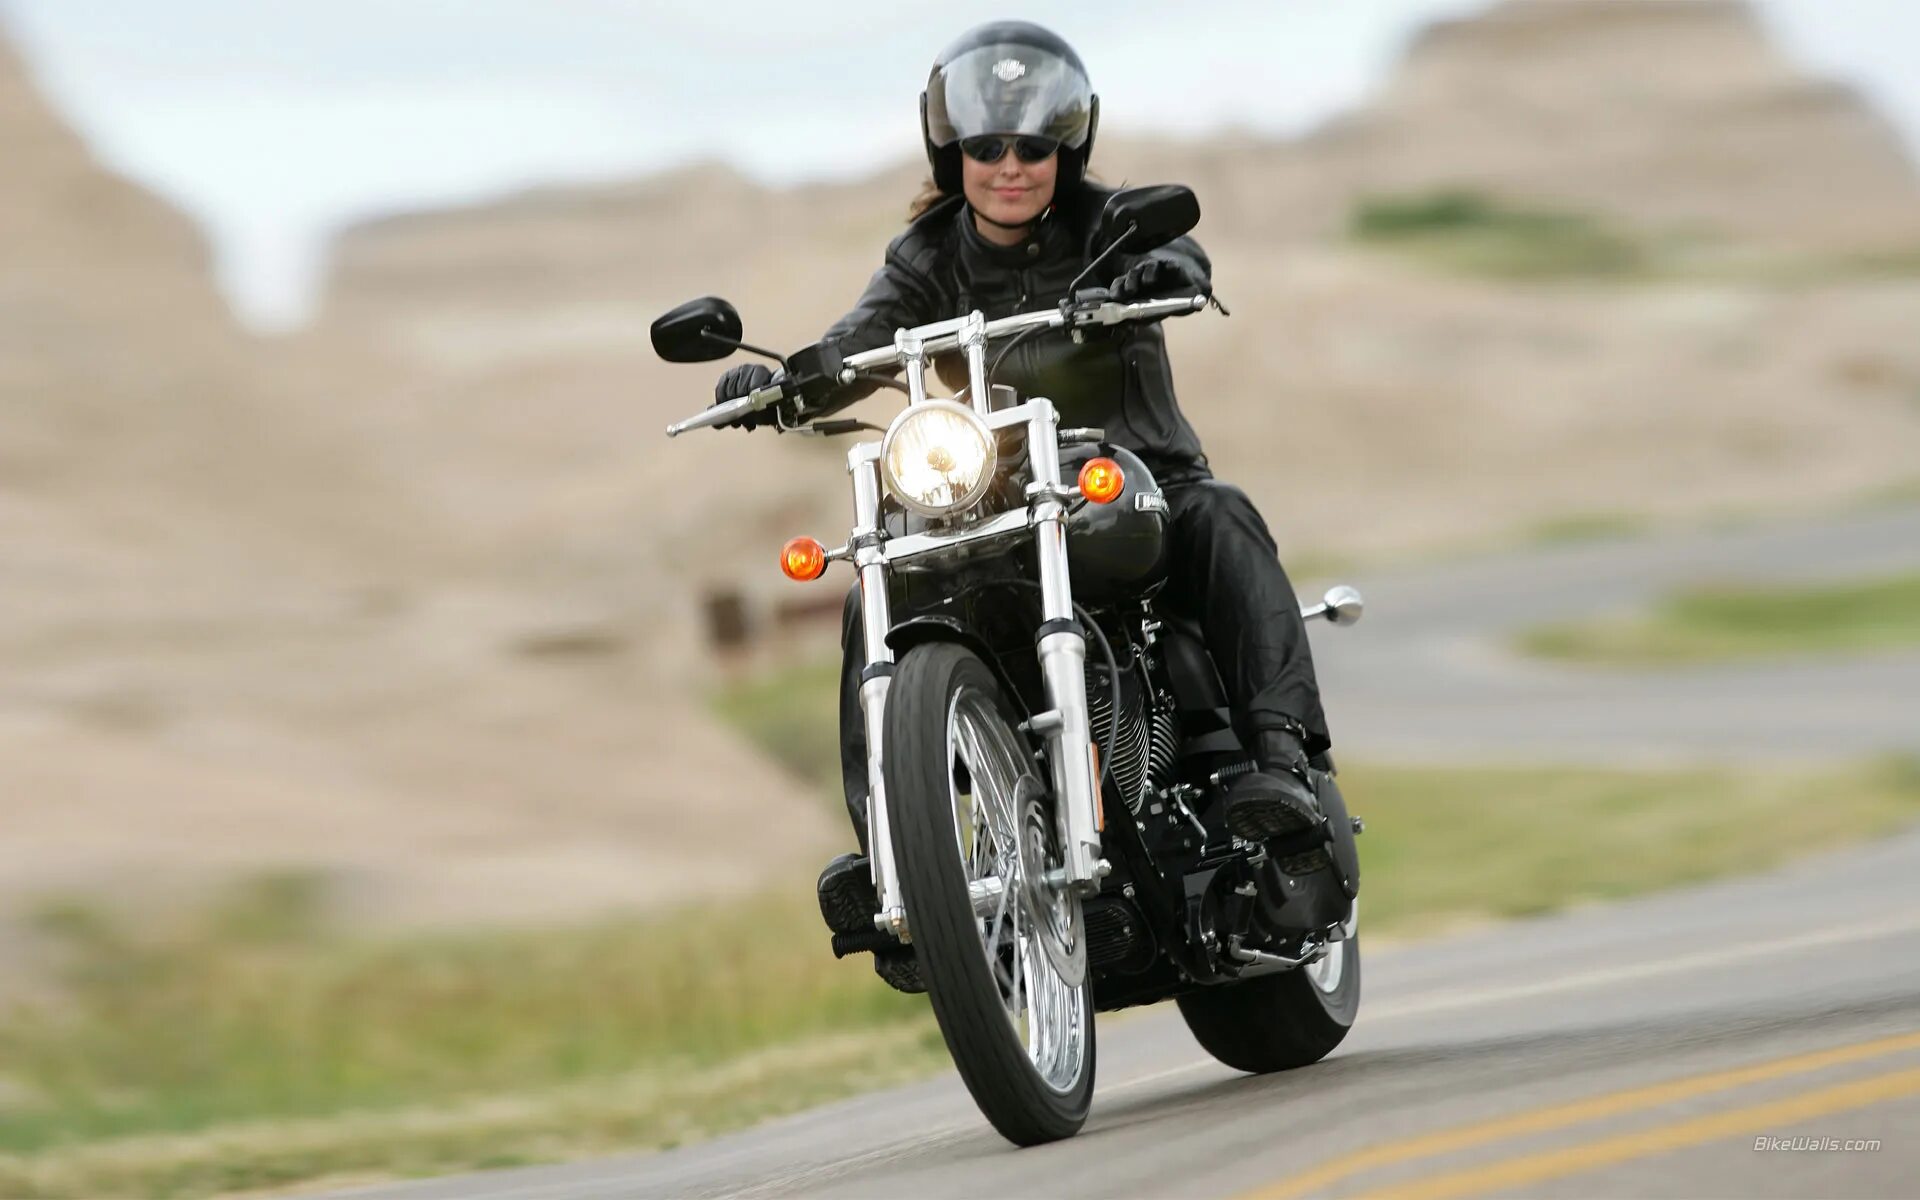 Harley Davidson 2006 Softail Heritage. Женский Харлей Дэвидсон мотоцикл. Харлей Дэвидсон чоппер езда. Девушка на мотоцикле.